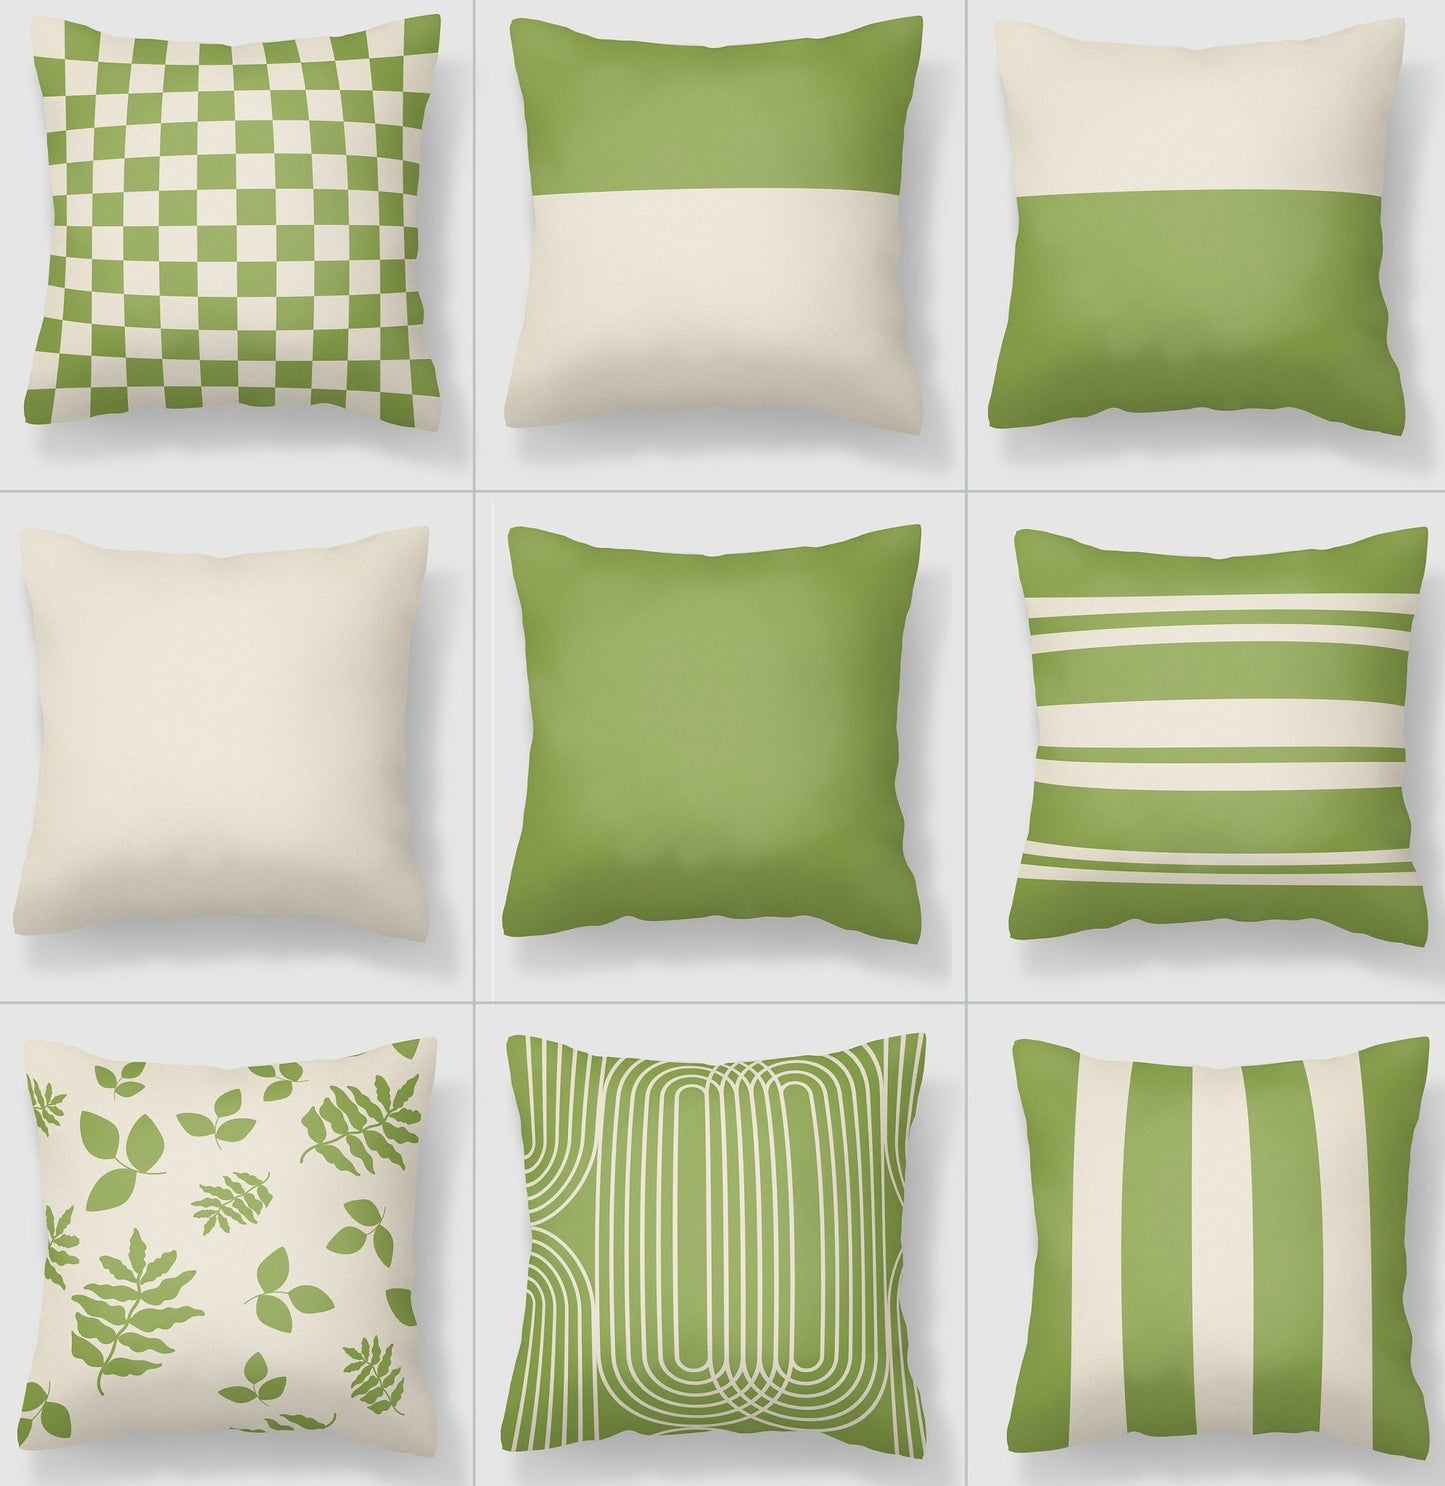 Green and Cream Cushion Covers - Throw Pillows